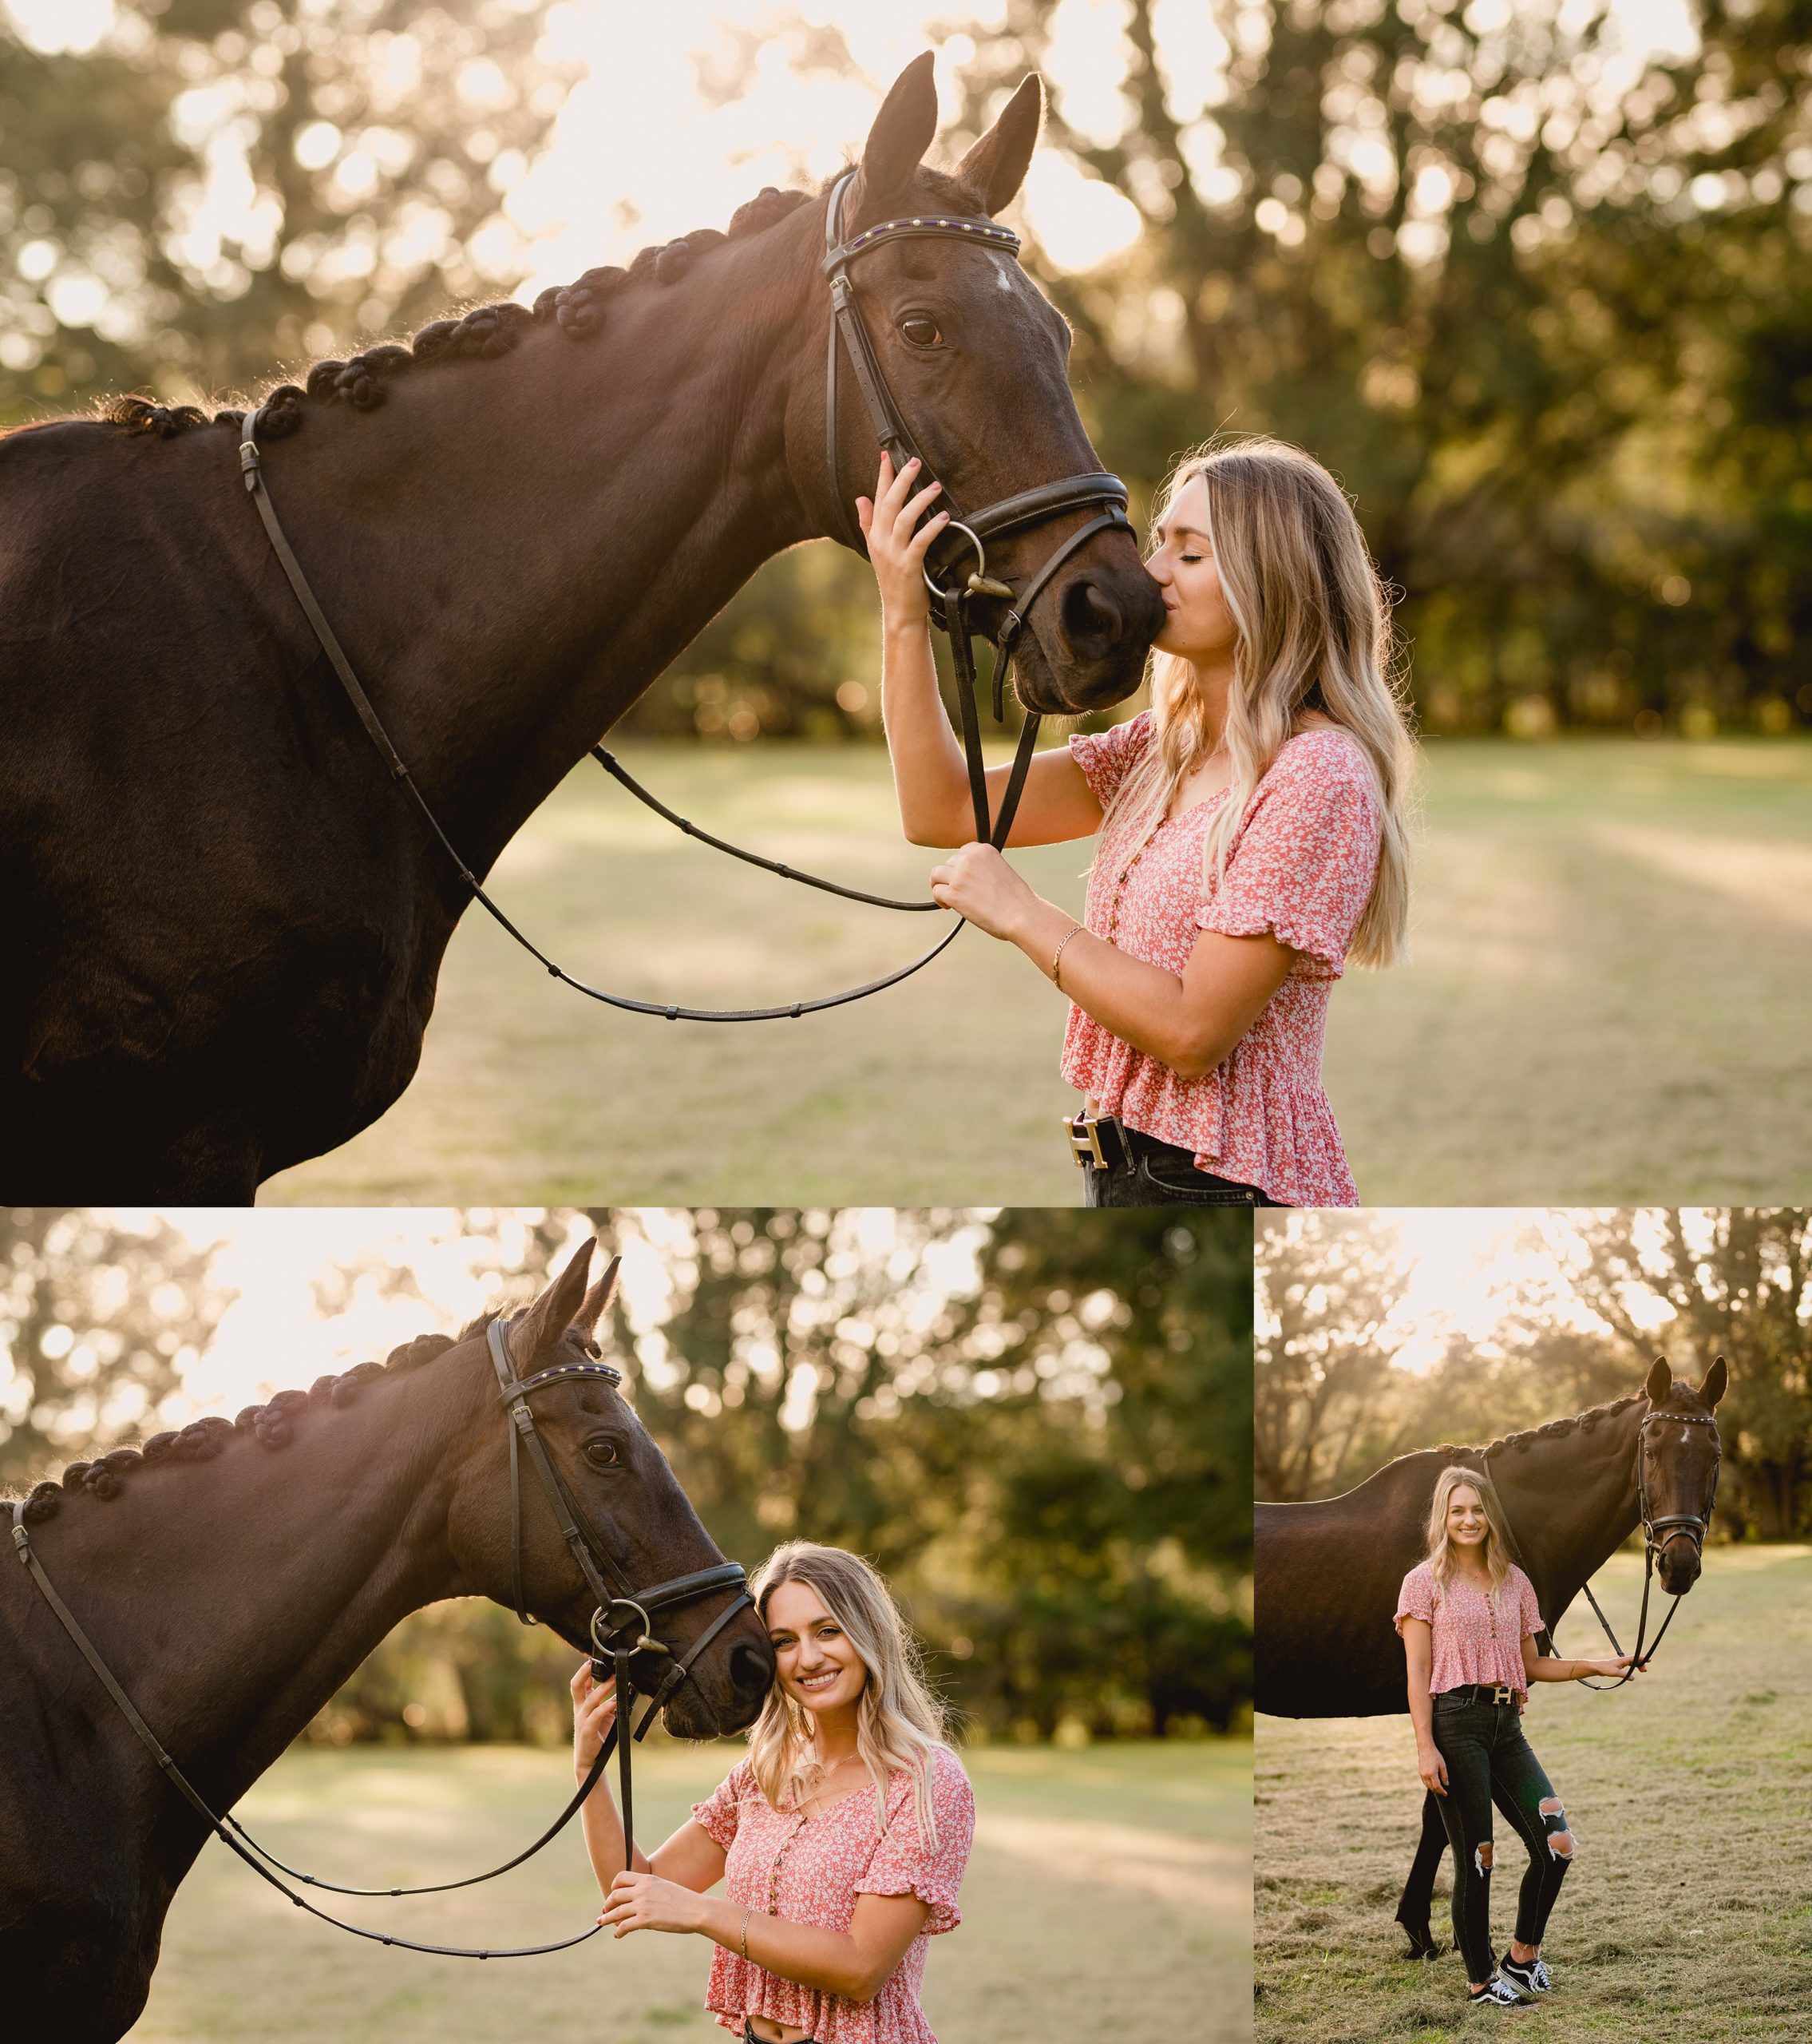 Horse and rider photos taken at sunset in Northwest Florida.